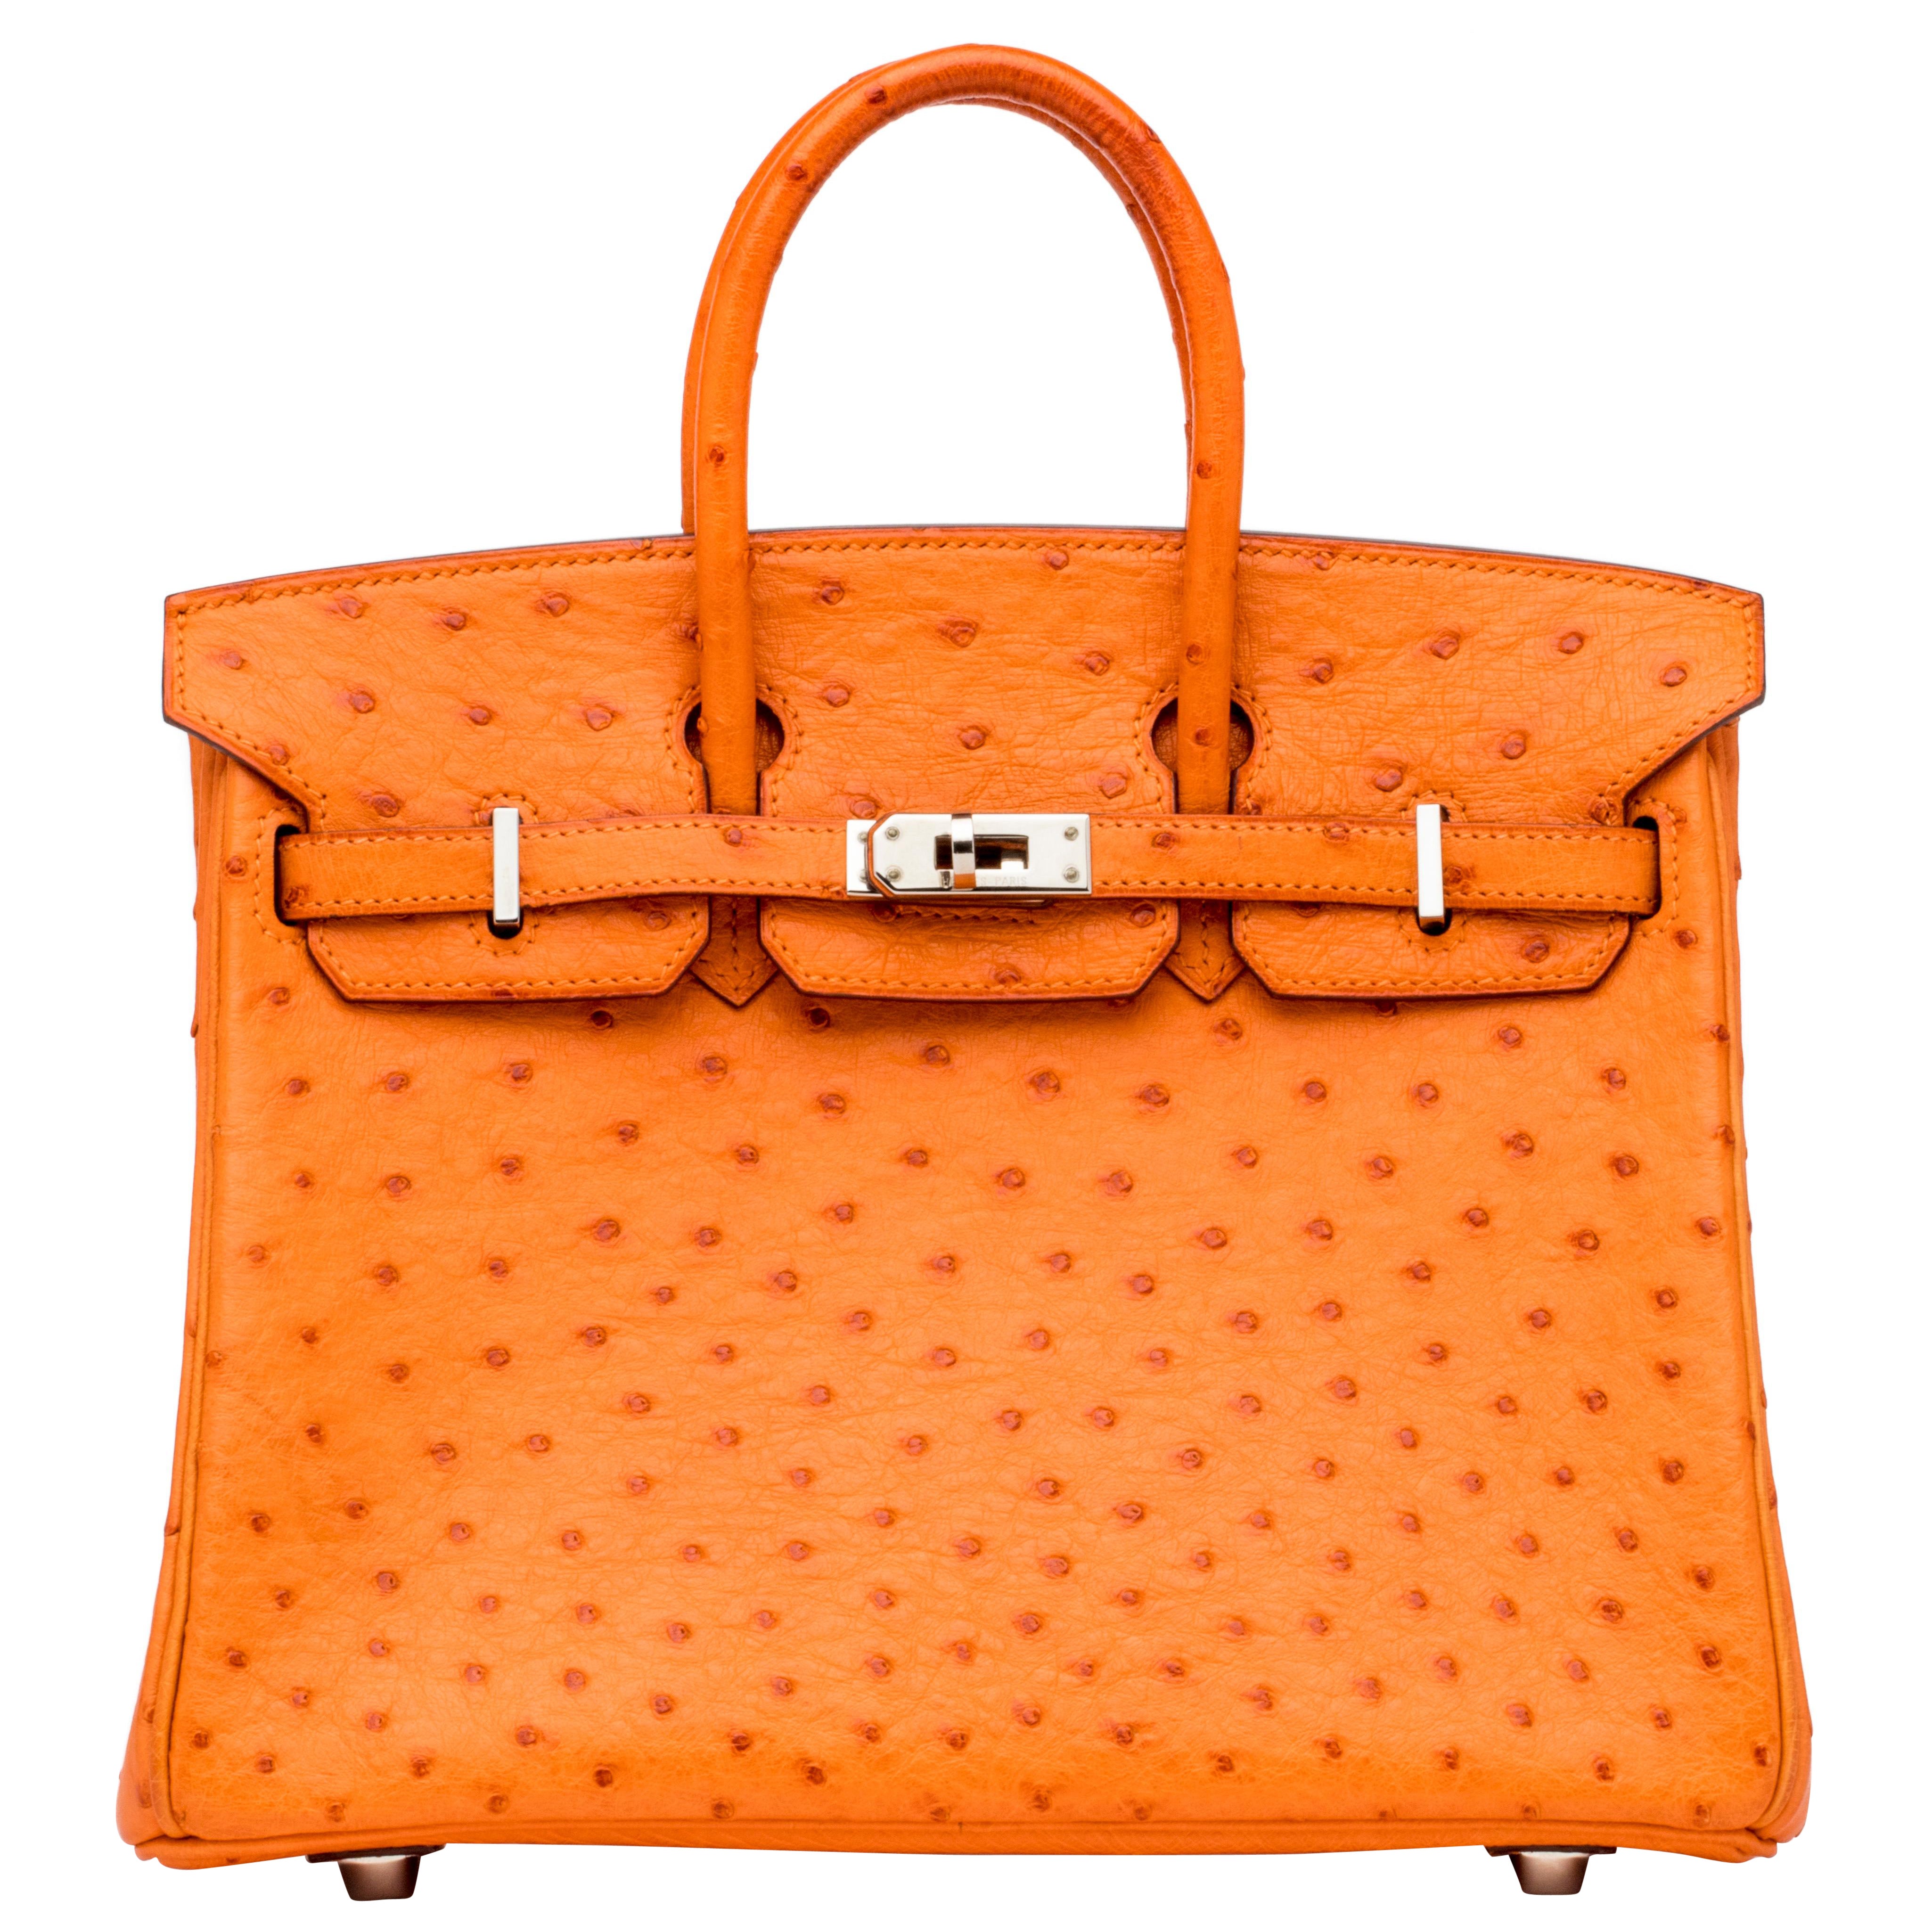 Hermes Birkin Ostrich Bags - 28 For Sale on 1stDibs